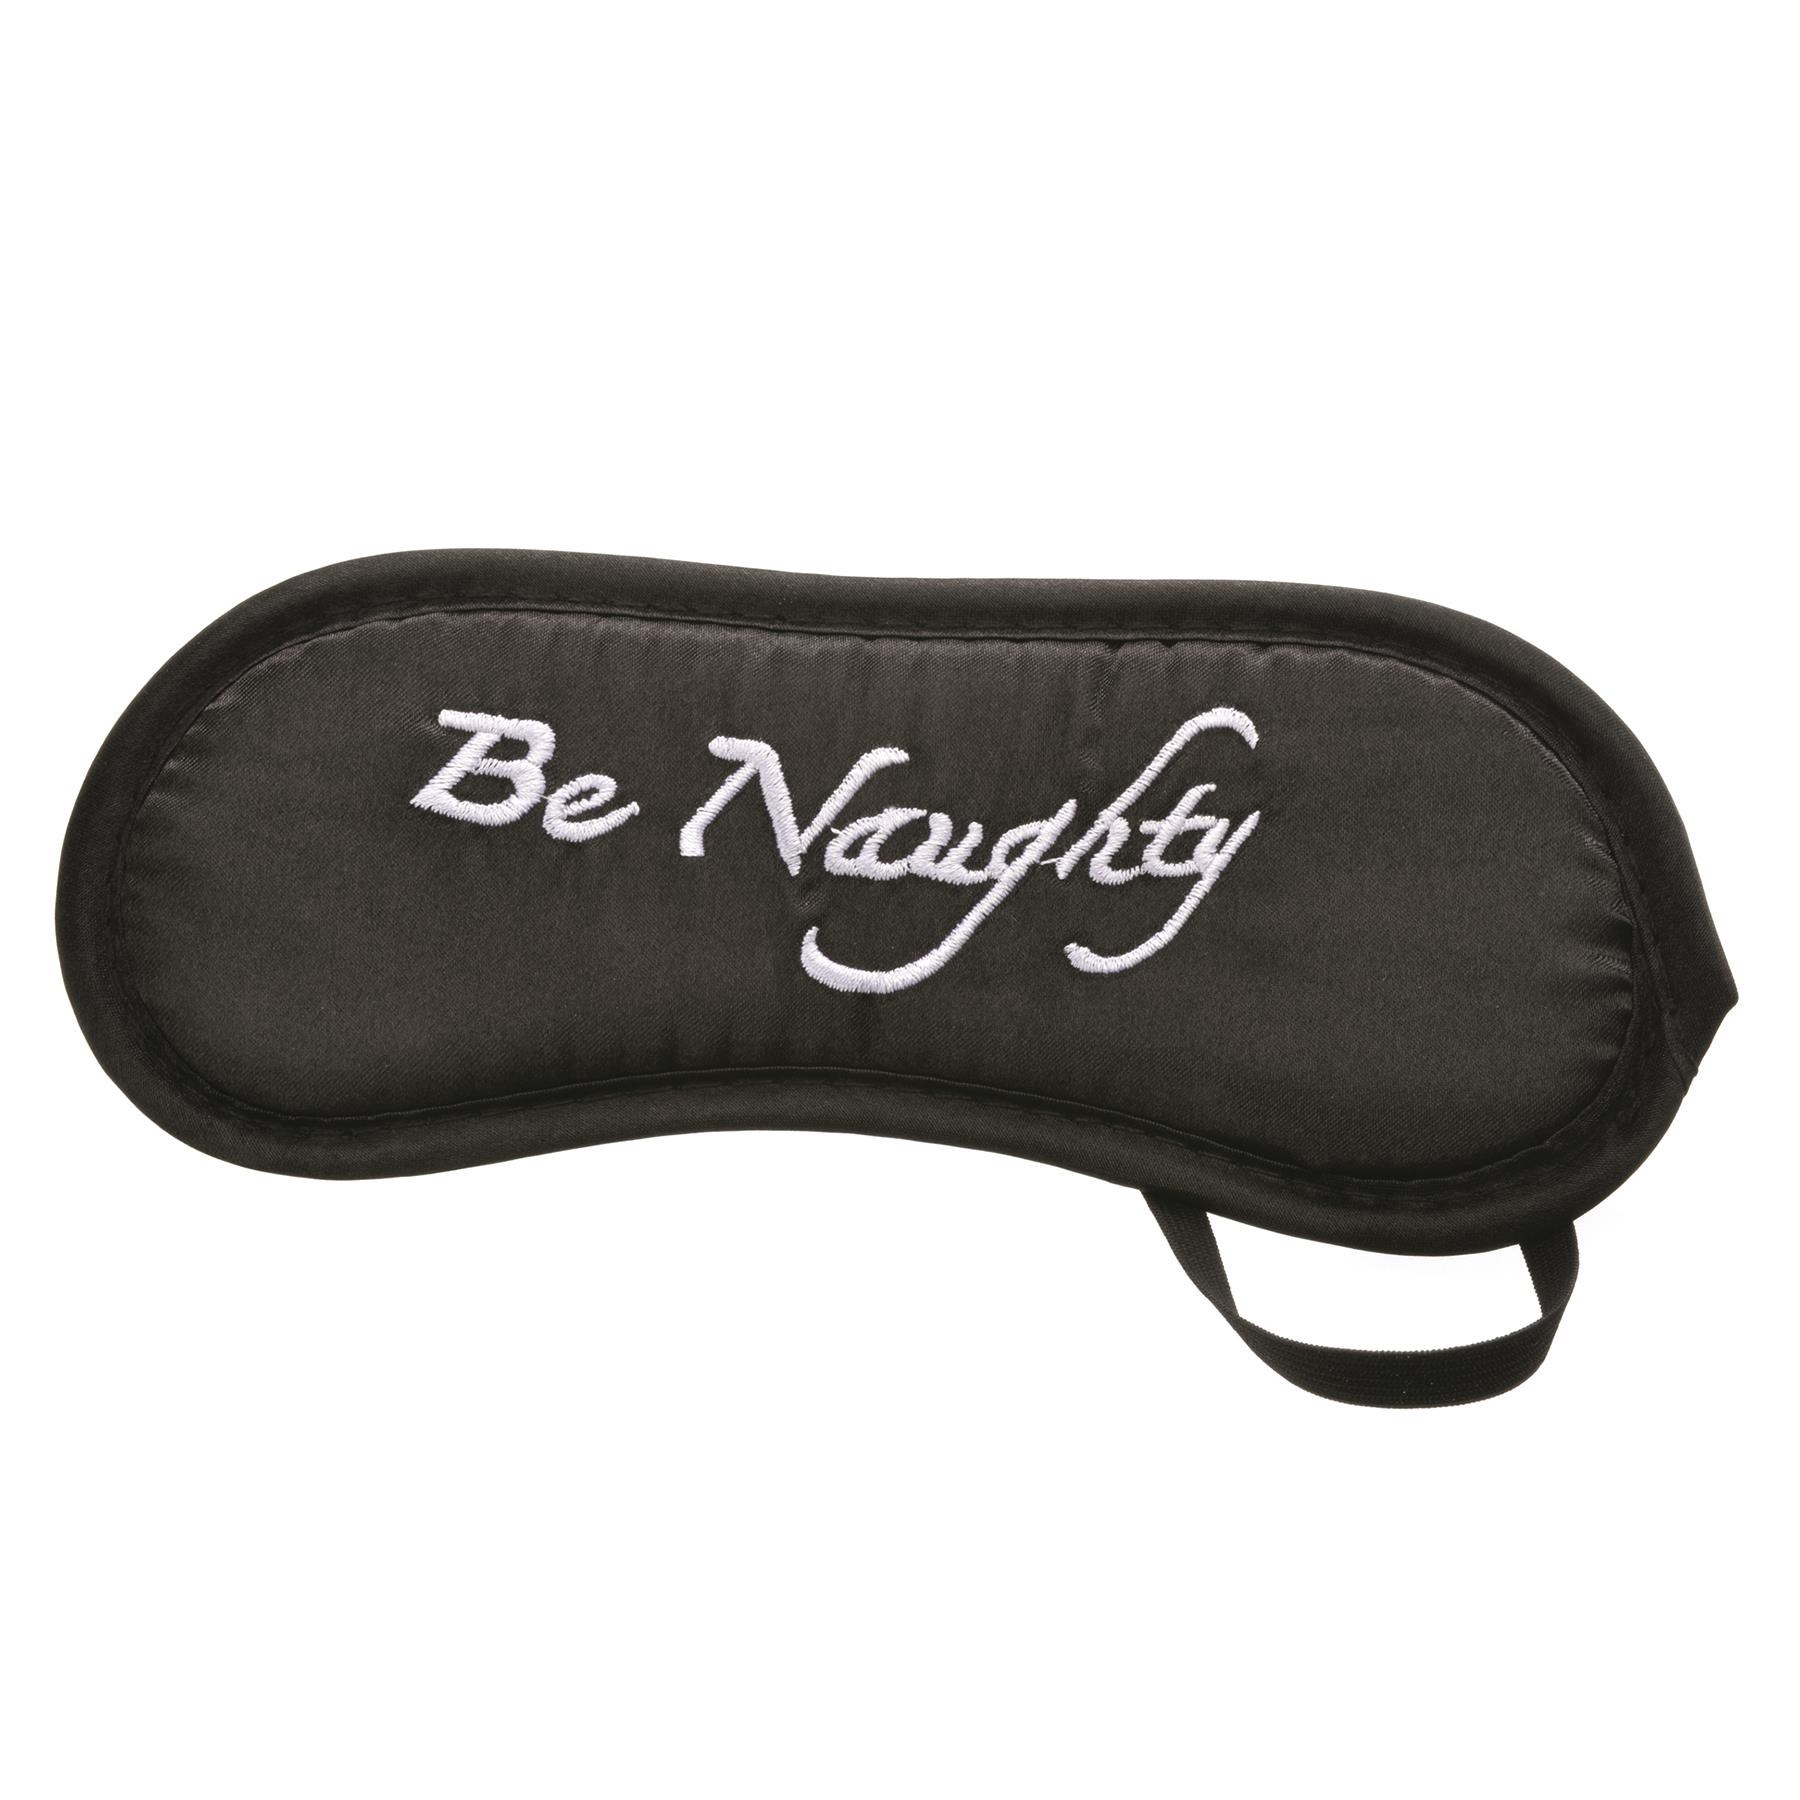 Be Naughty Blindfold Product Shot - Black